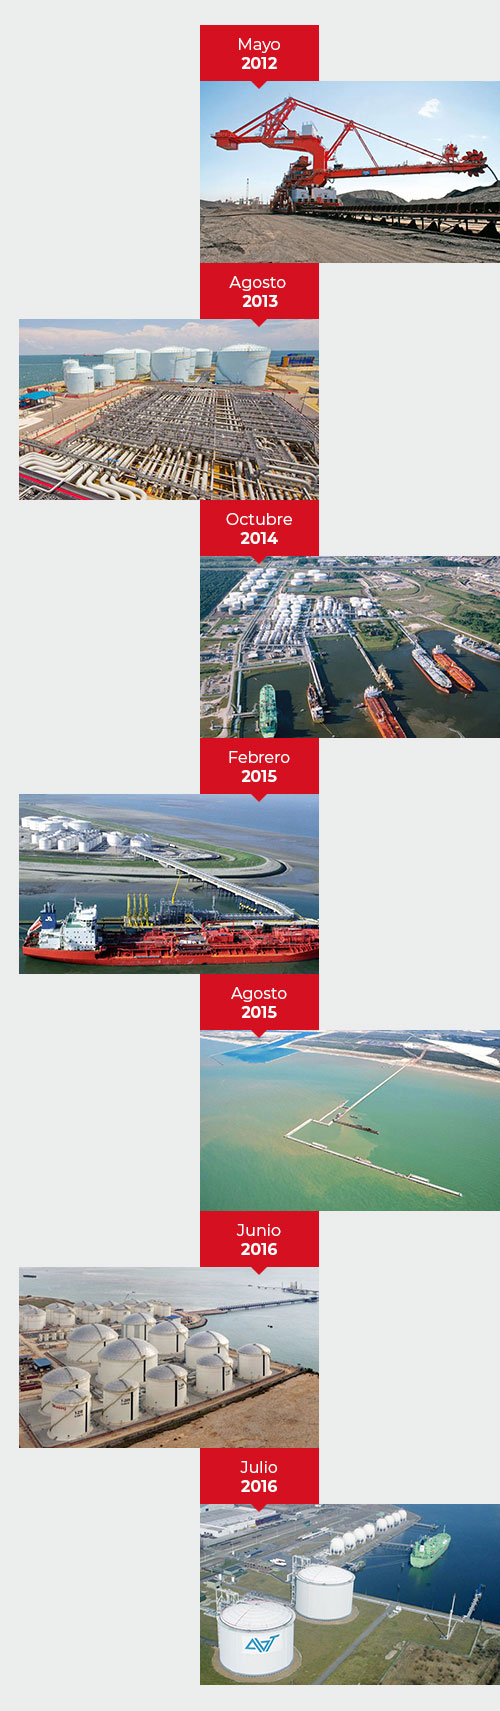 Oiltanking Timeline 2010